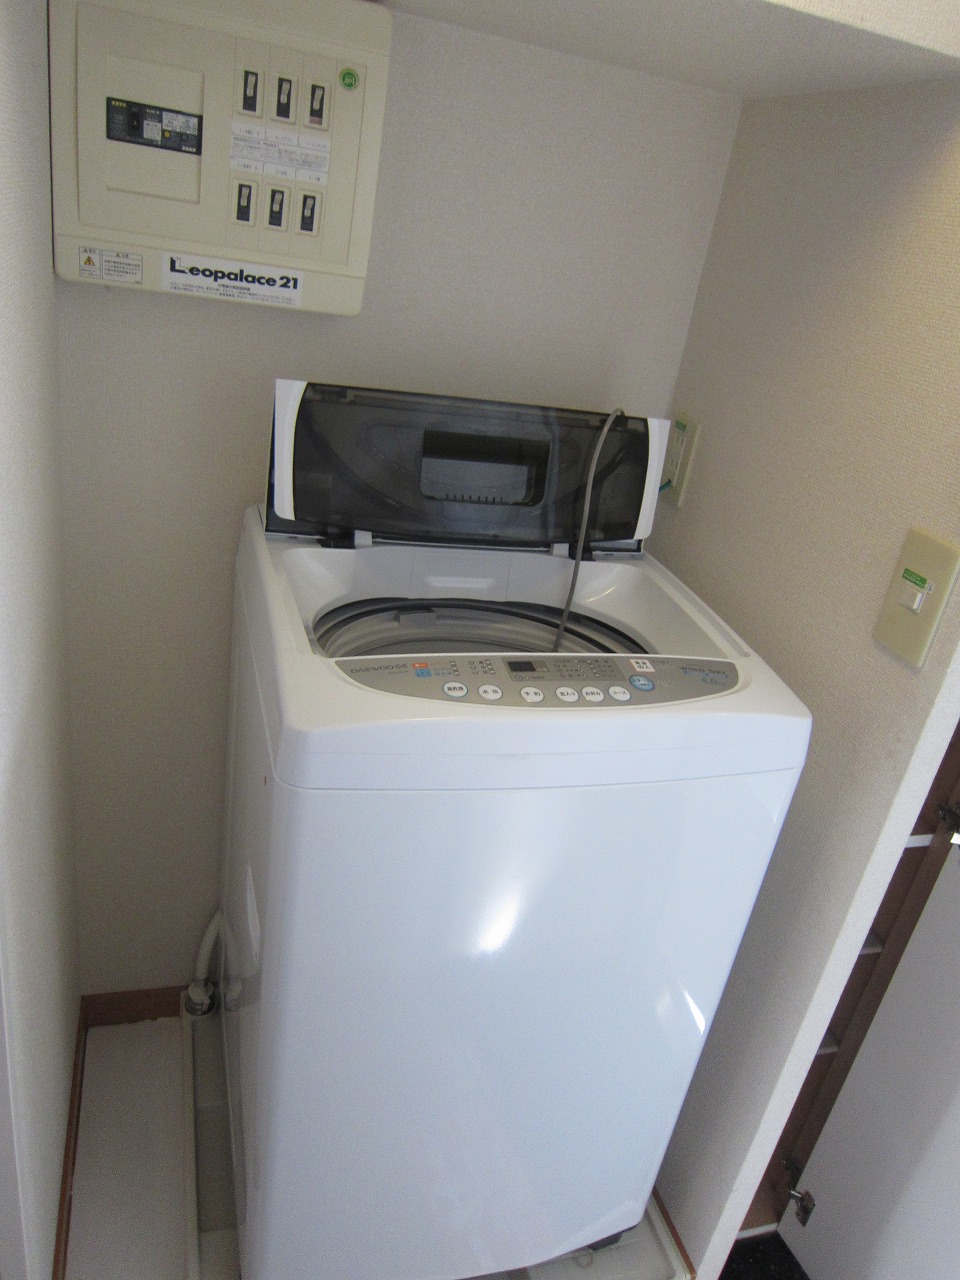 Other Equipment. With washing machine